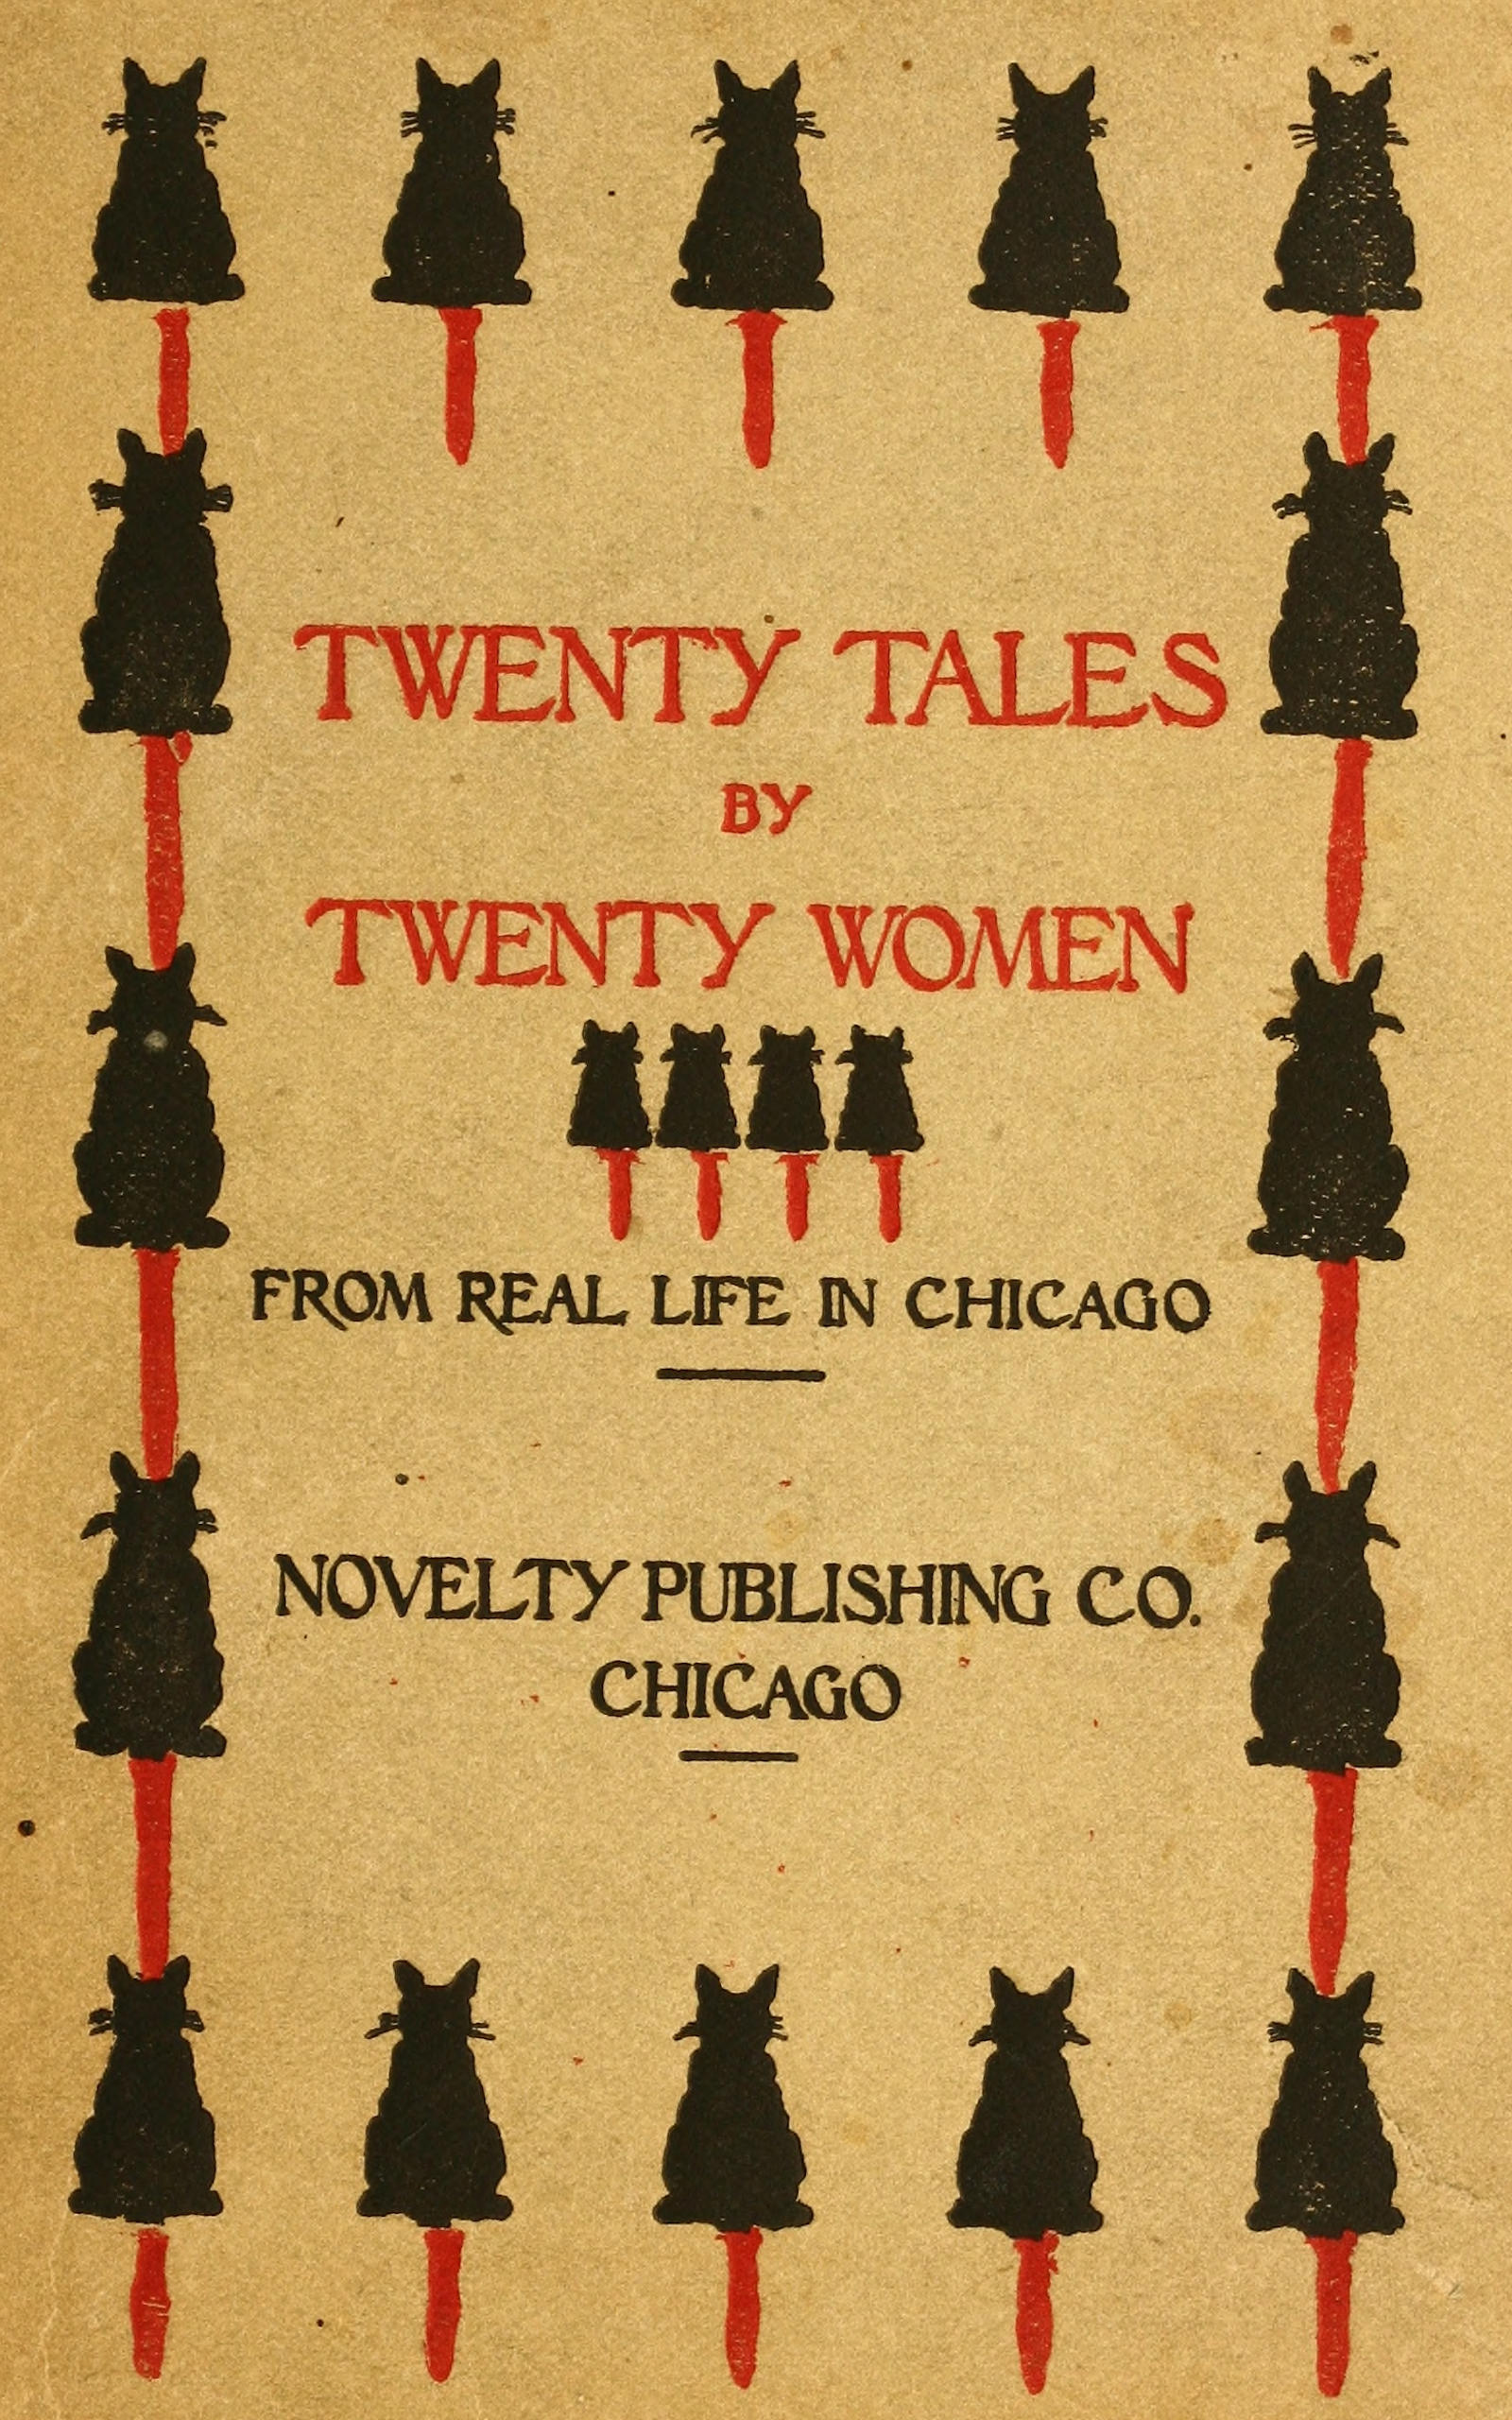 Twenty tales by twenty women: From real life in Chicago